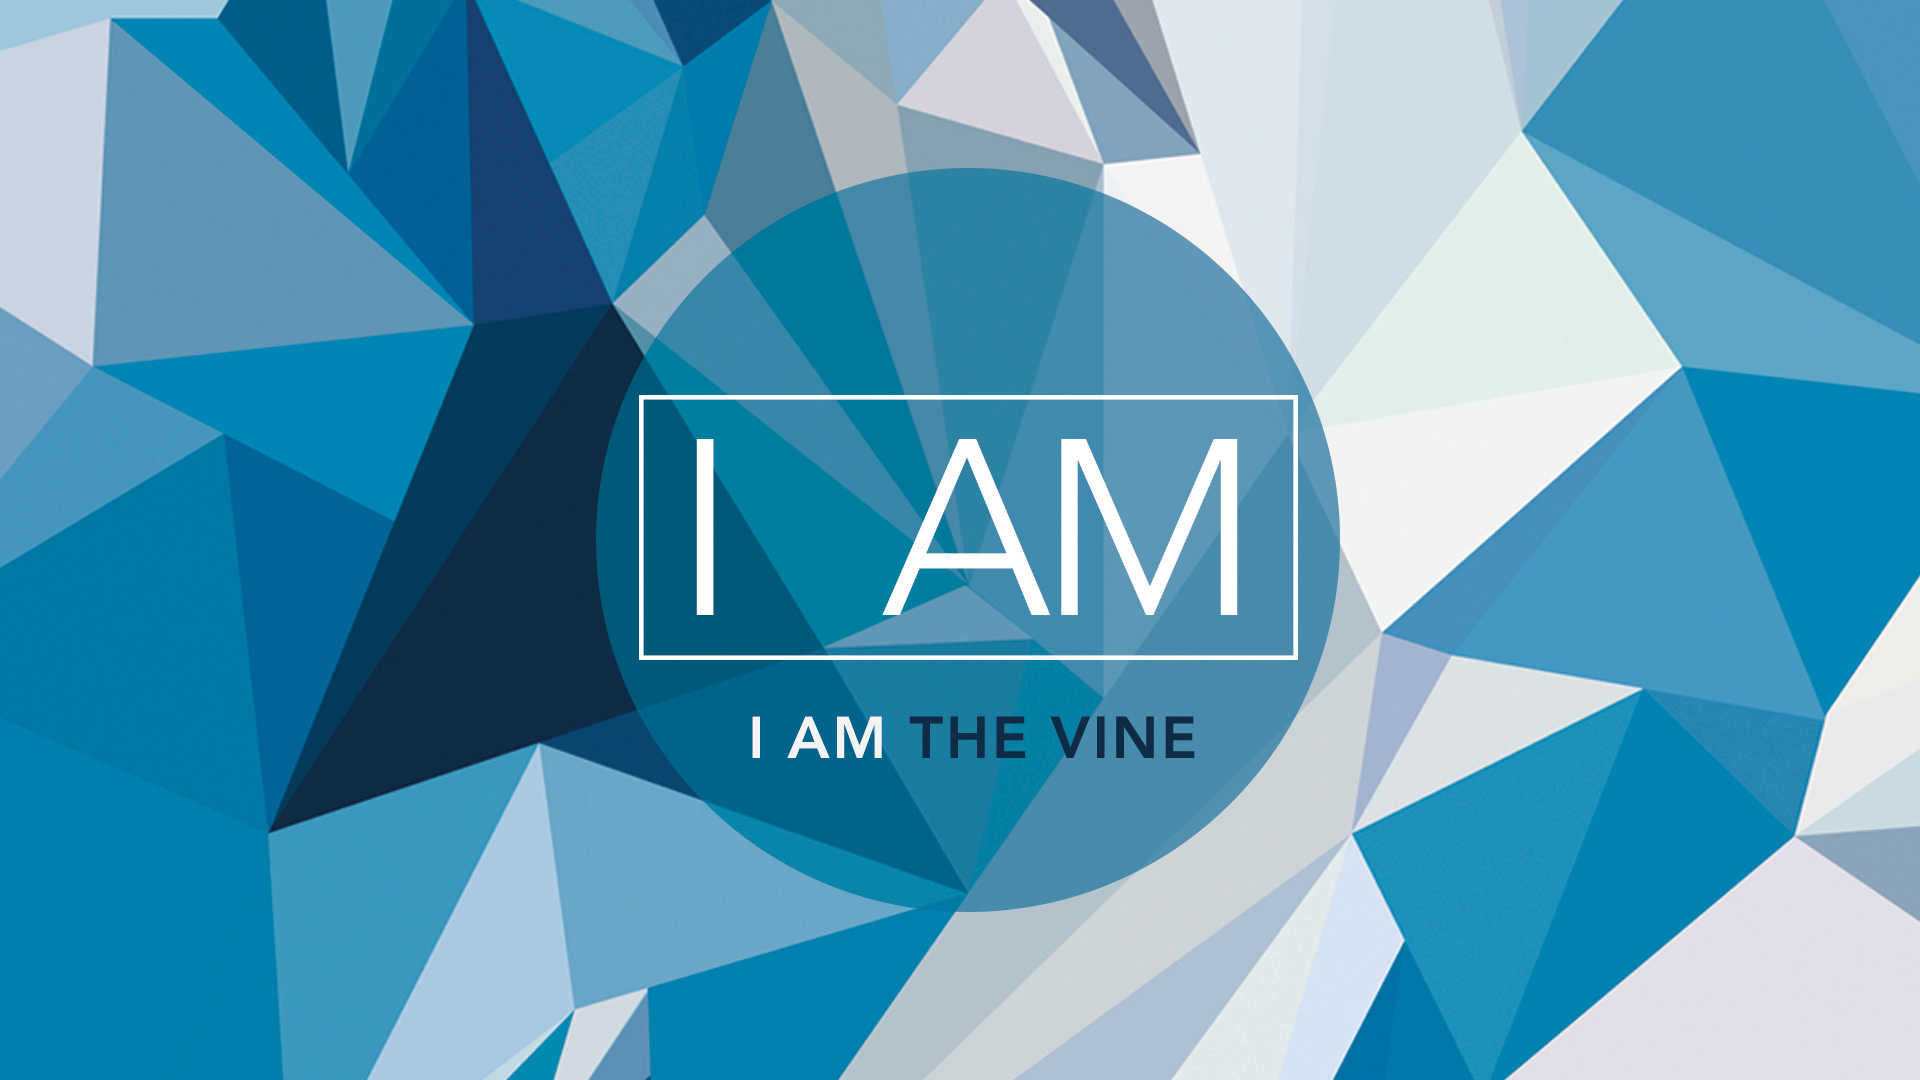 I am: The Vine